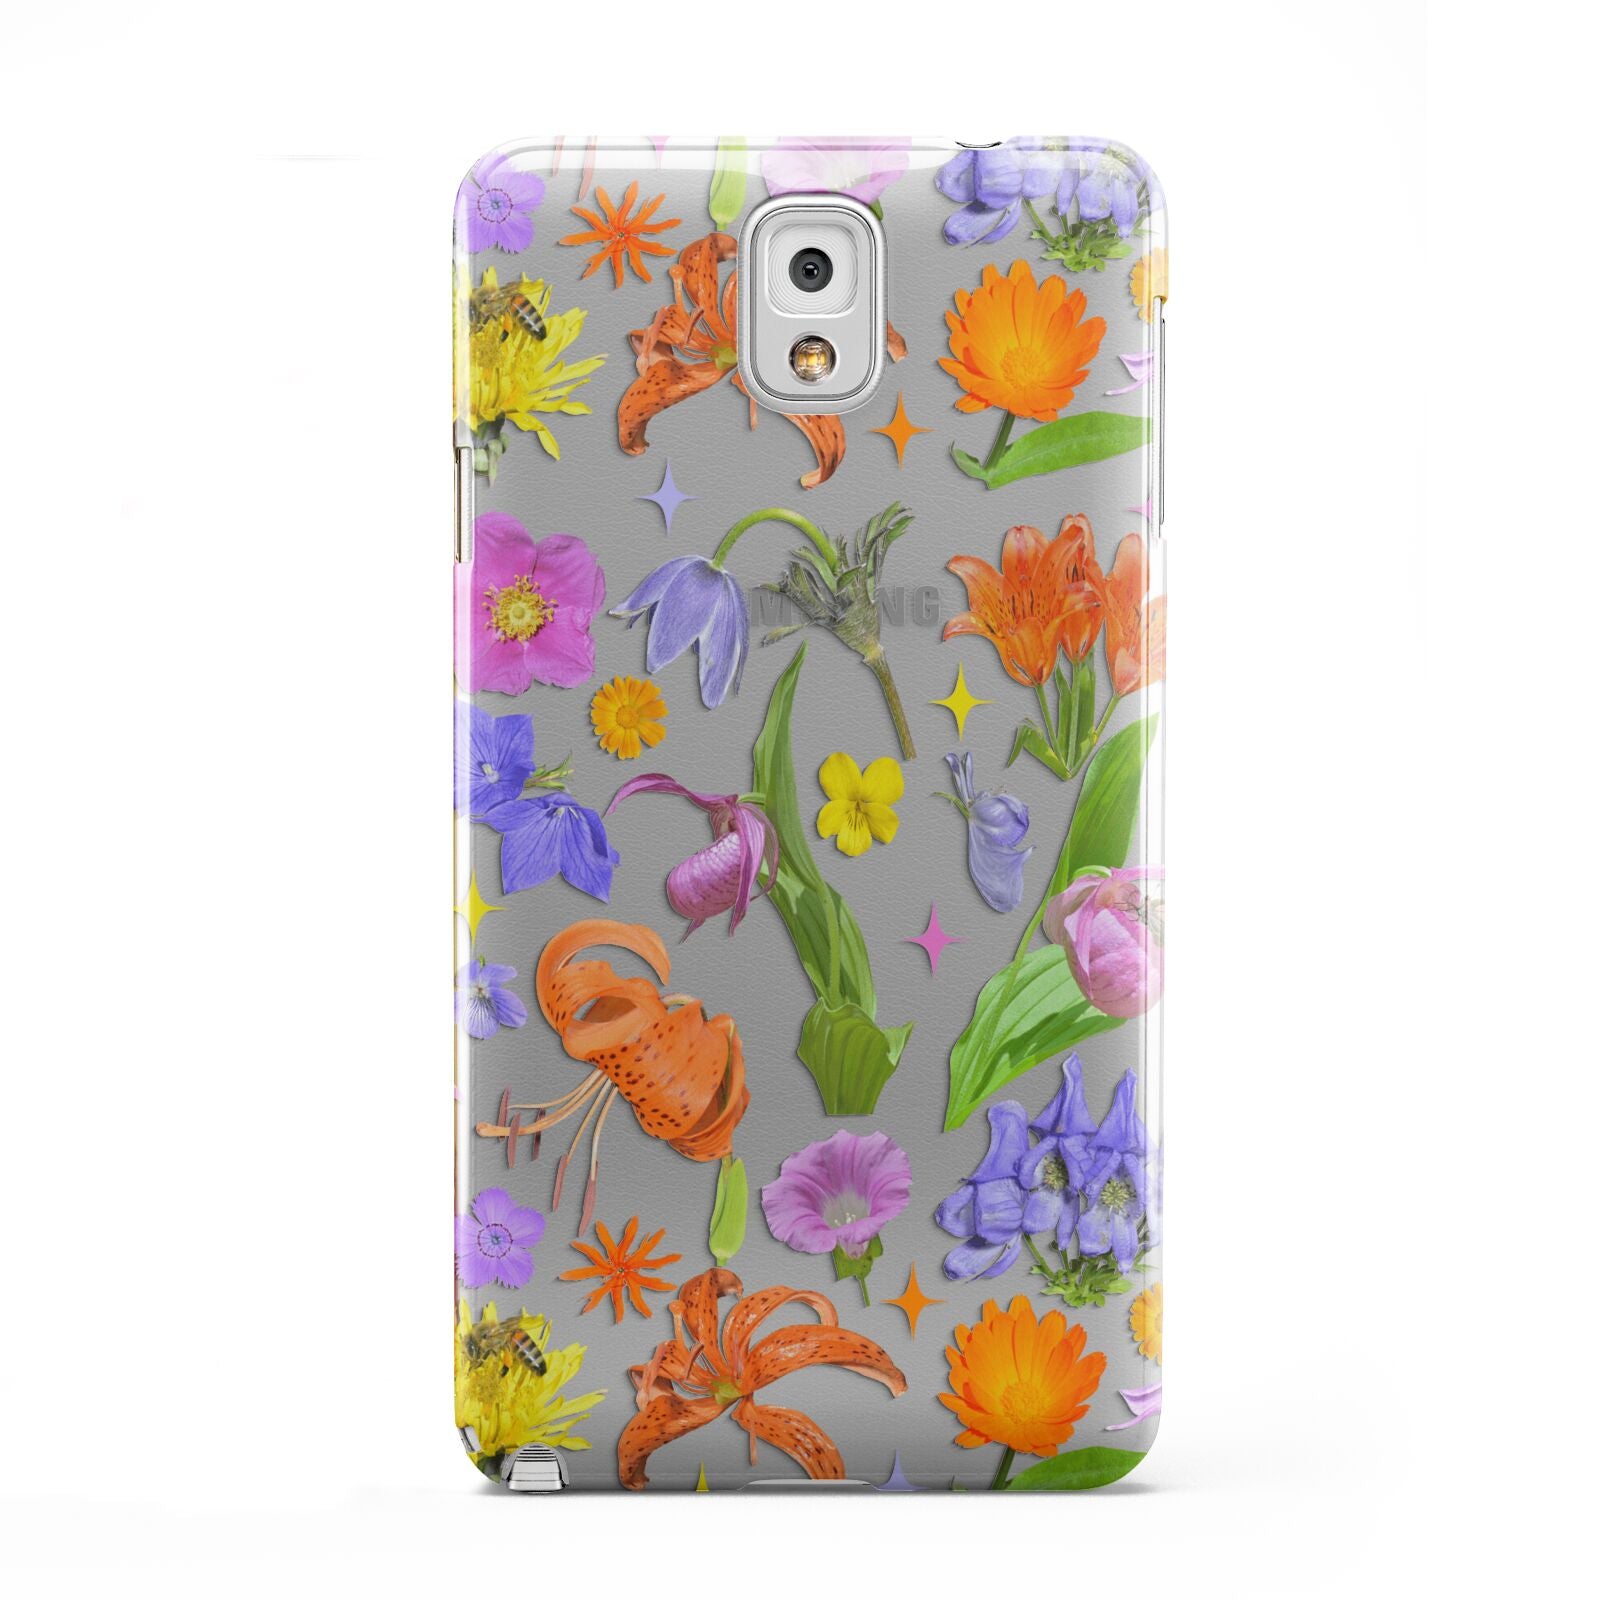 Floral Mix Samsung Galaxy Note 3 Case